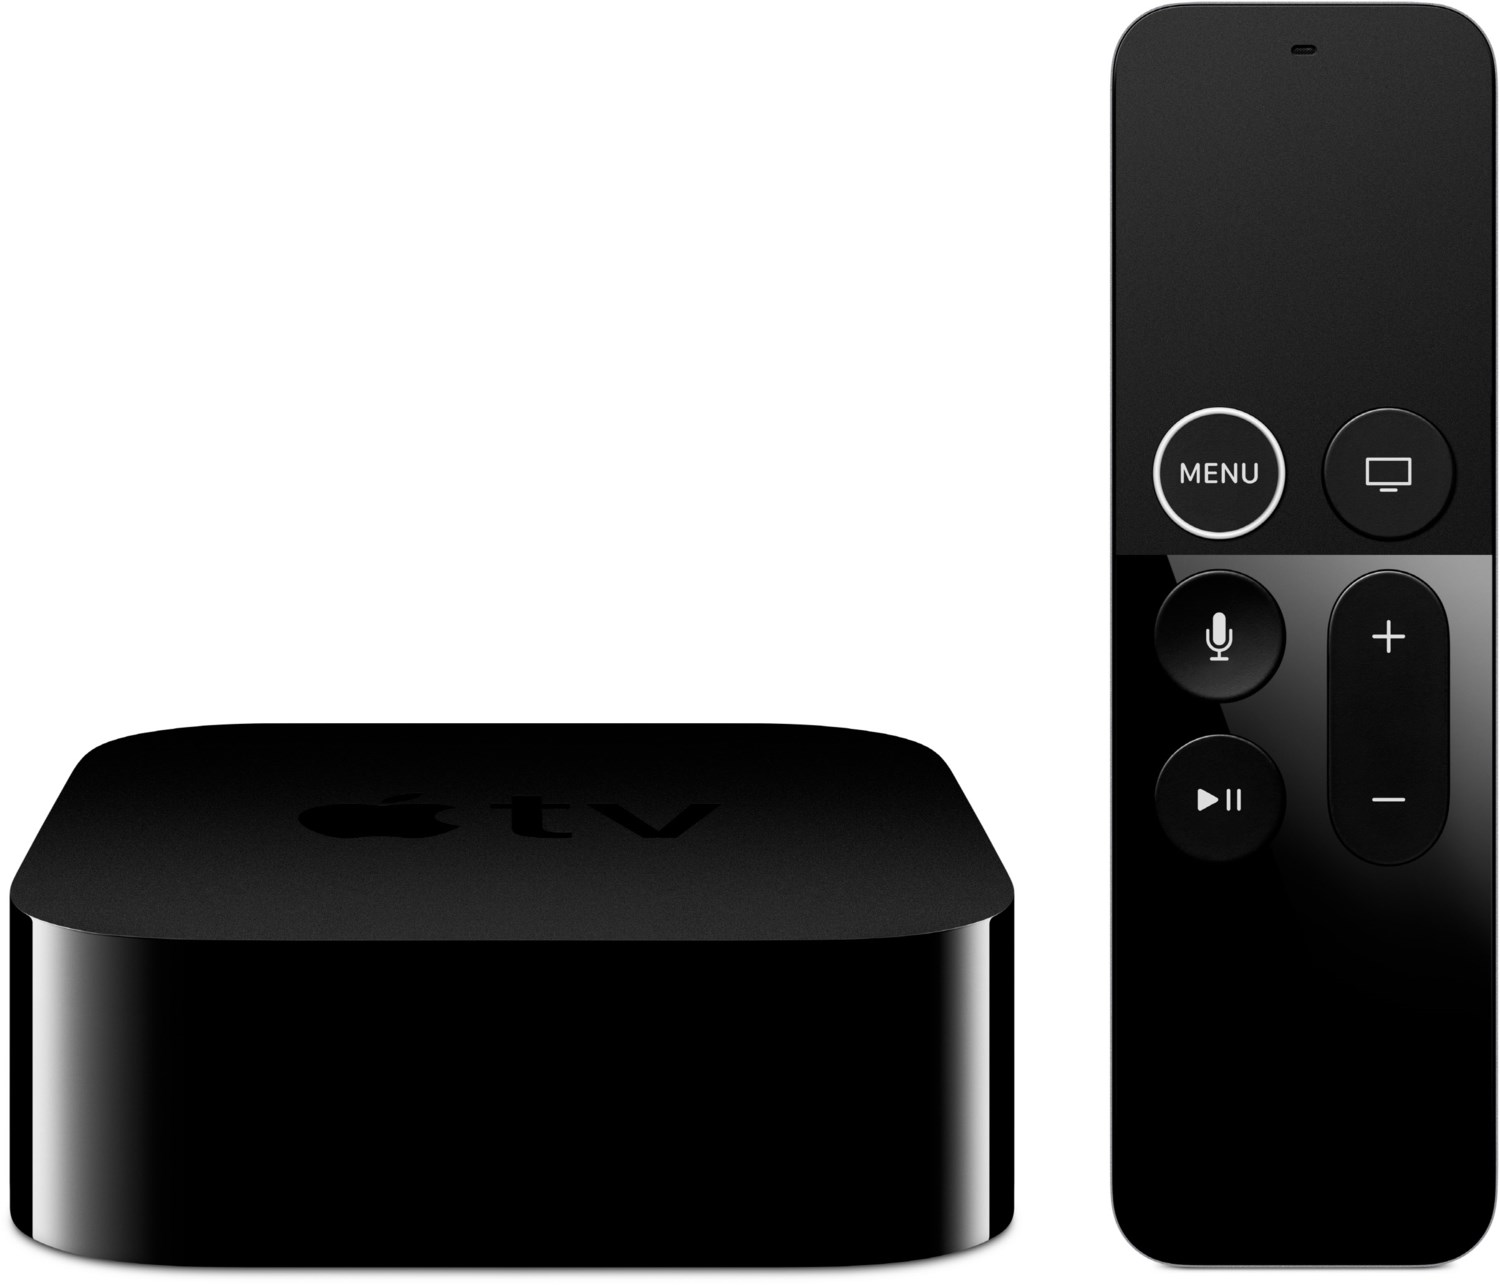 apple tv (32gb) 4th generation